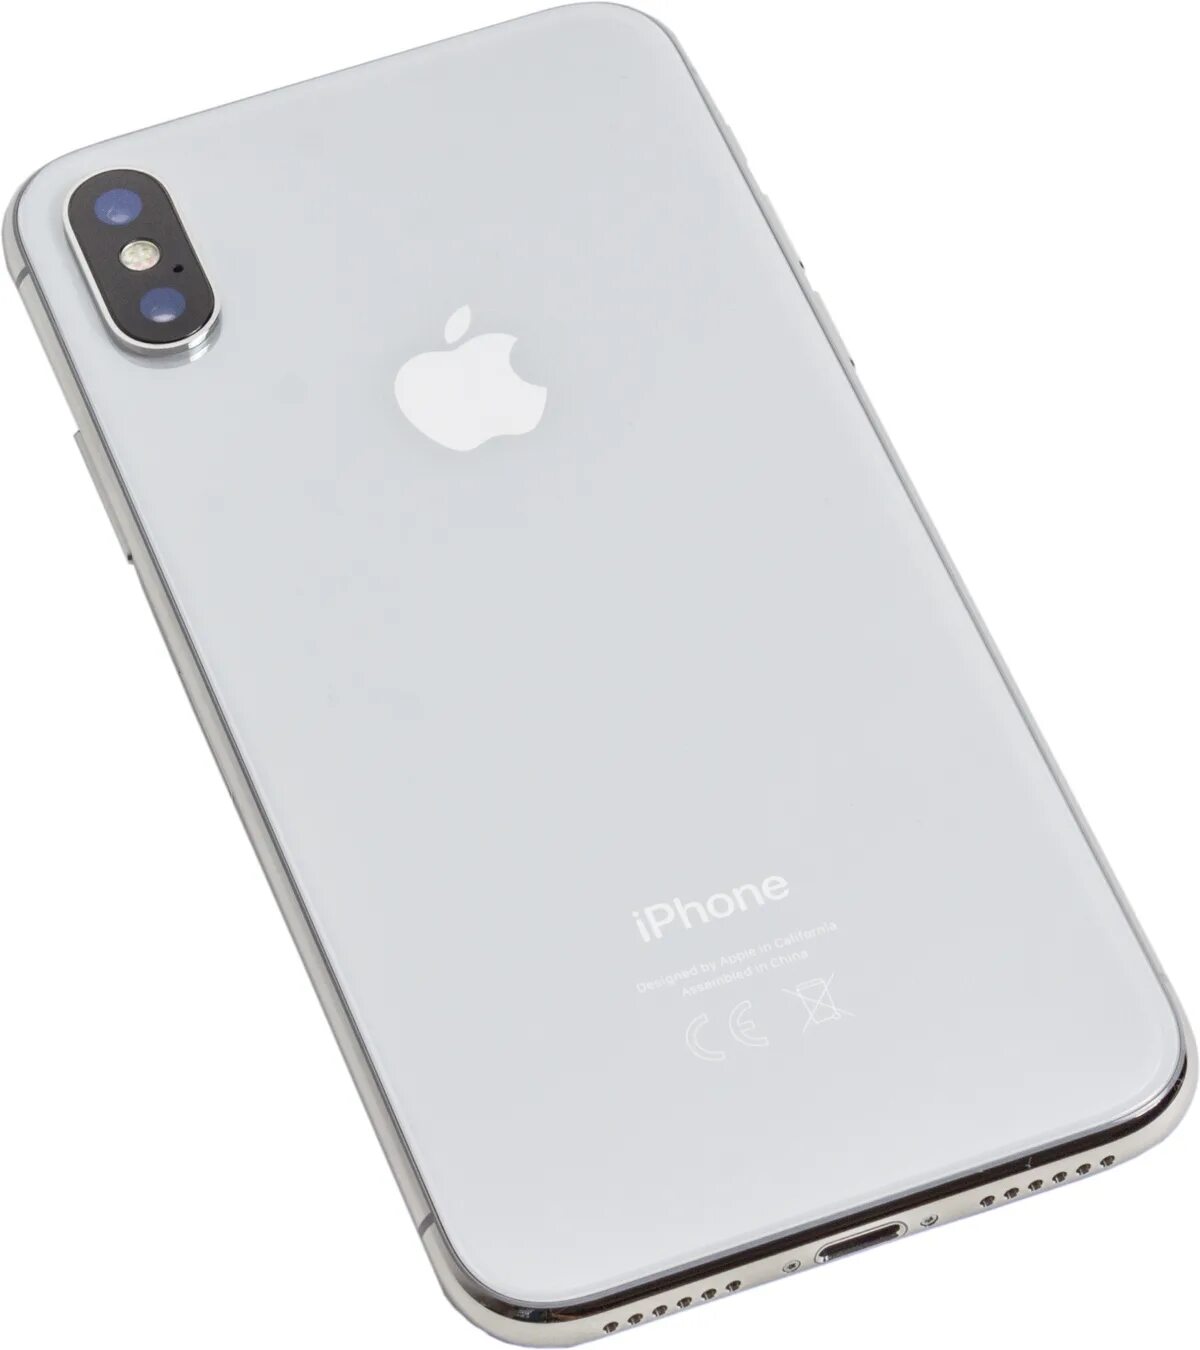 Купить 14 про 256 спб. Iphone x 256 ГБ, серебристый. Iphone 13 белый 256 ГБ. Iphone 13 Silver. Iphone 13 серебристый.